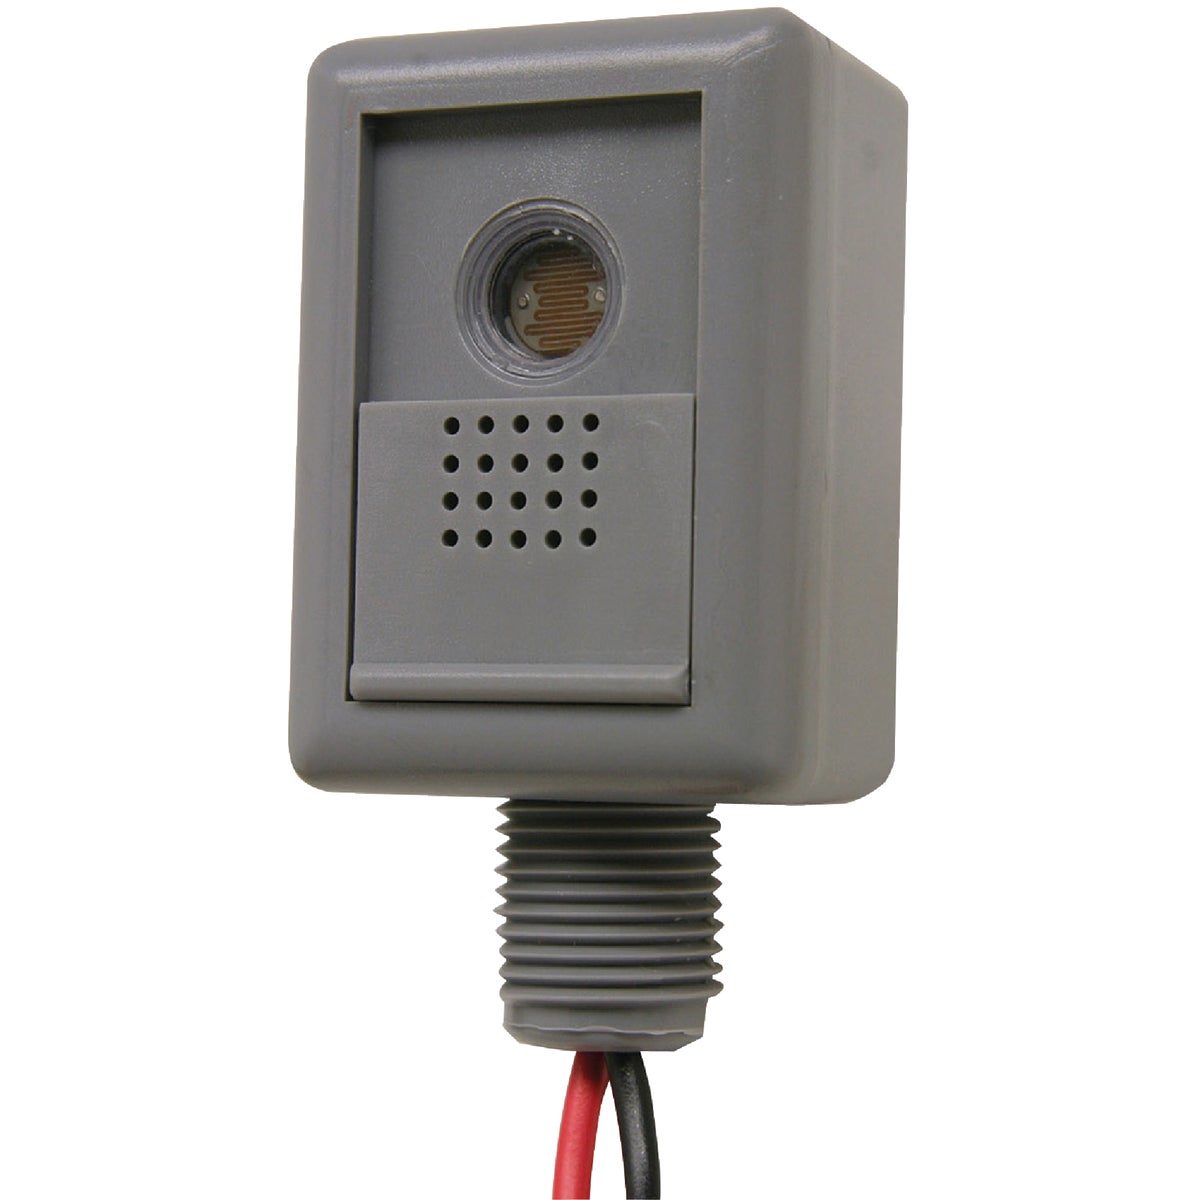 Item 516791, Heavy-duty, high-wattage photo control featuring adjustable sensitivity 